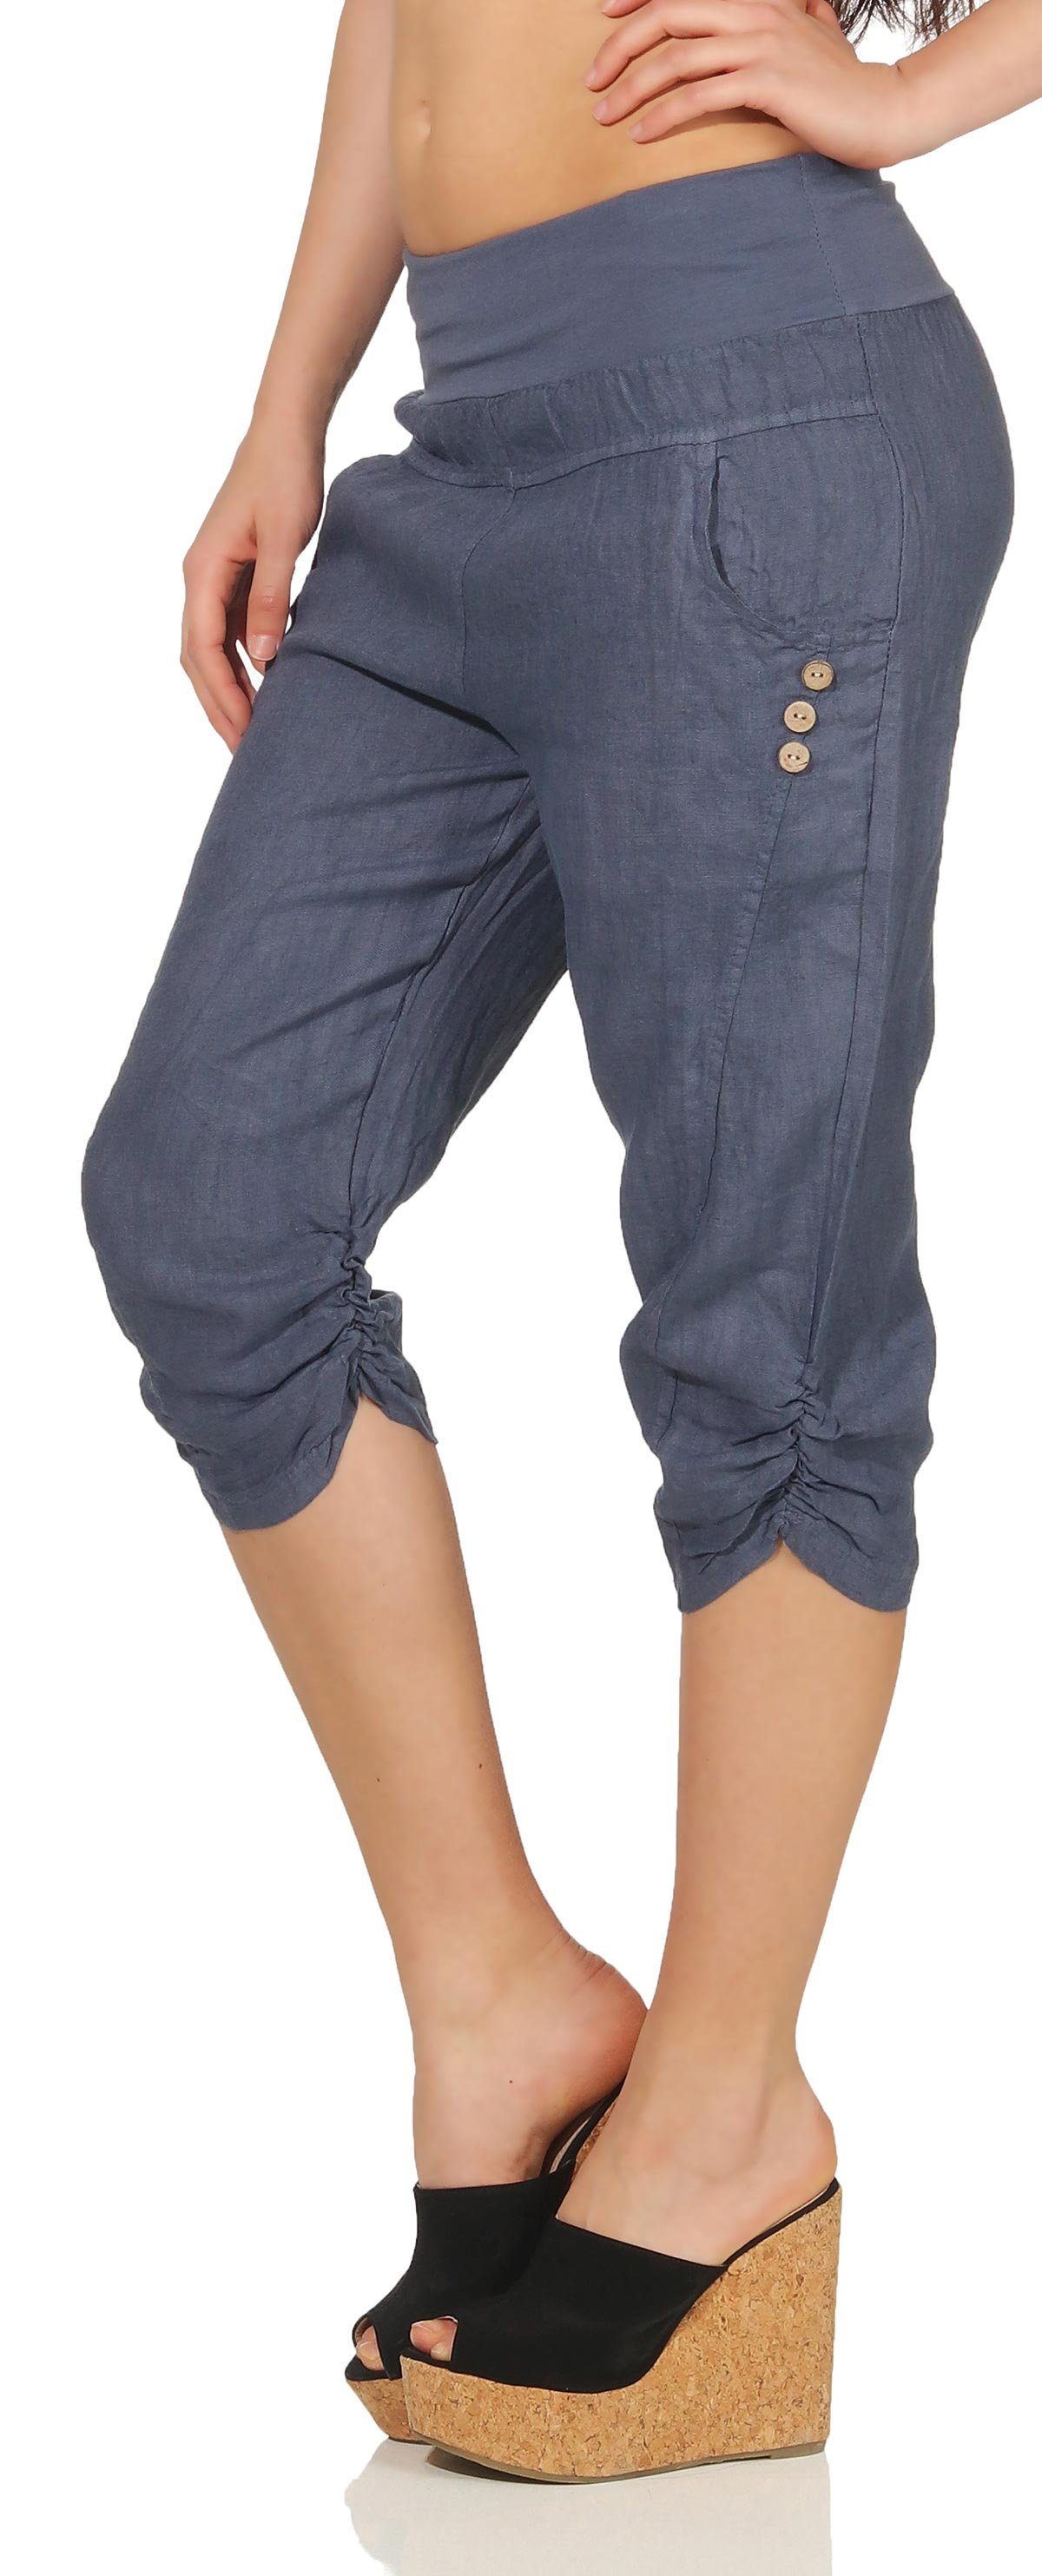 malito more Bund fashion 7988 Caprihose than Capri jeansblau mit Hose elastischem Leinen